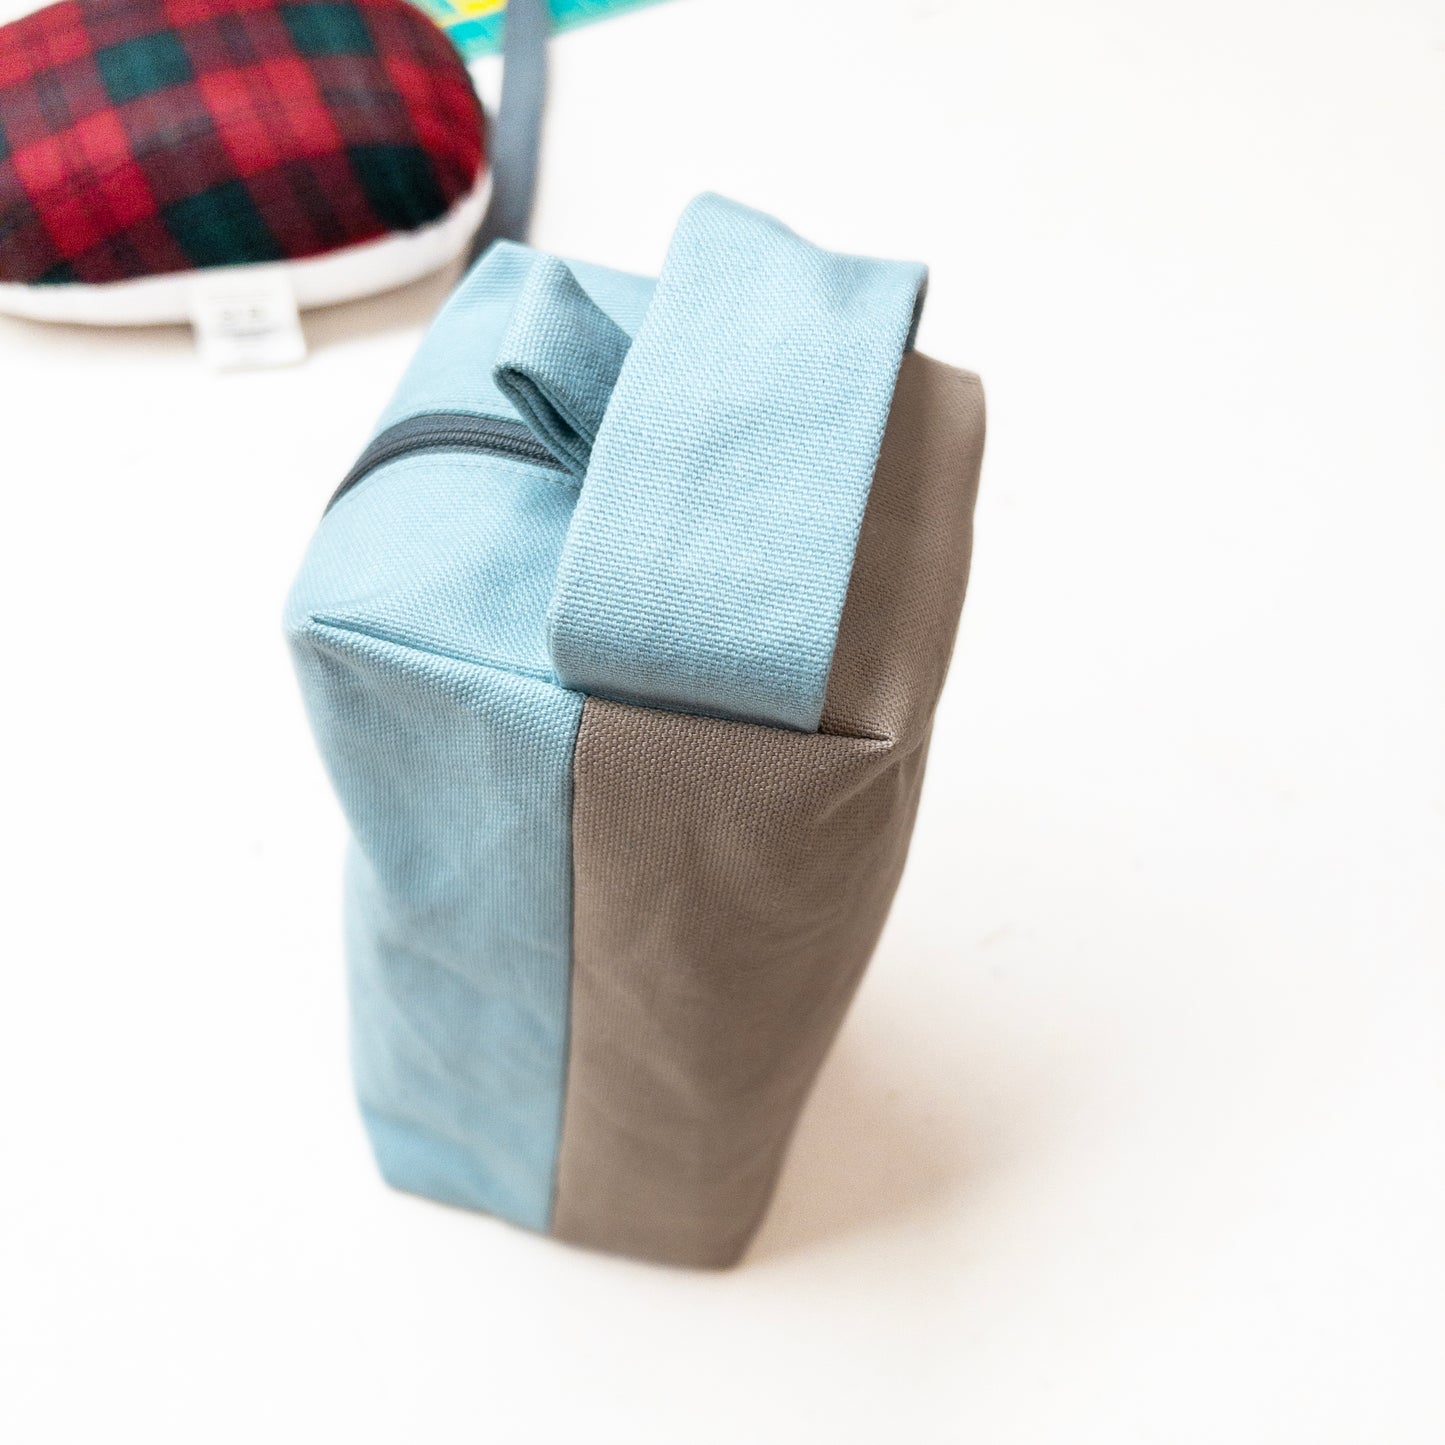 Boxed Zipper Bag Kits